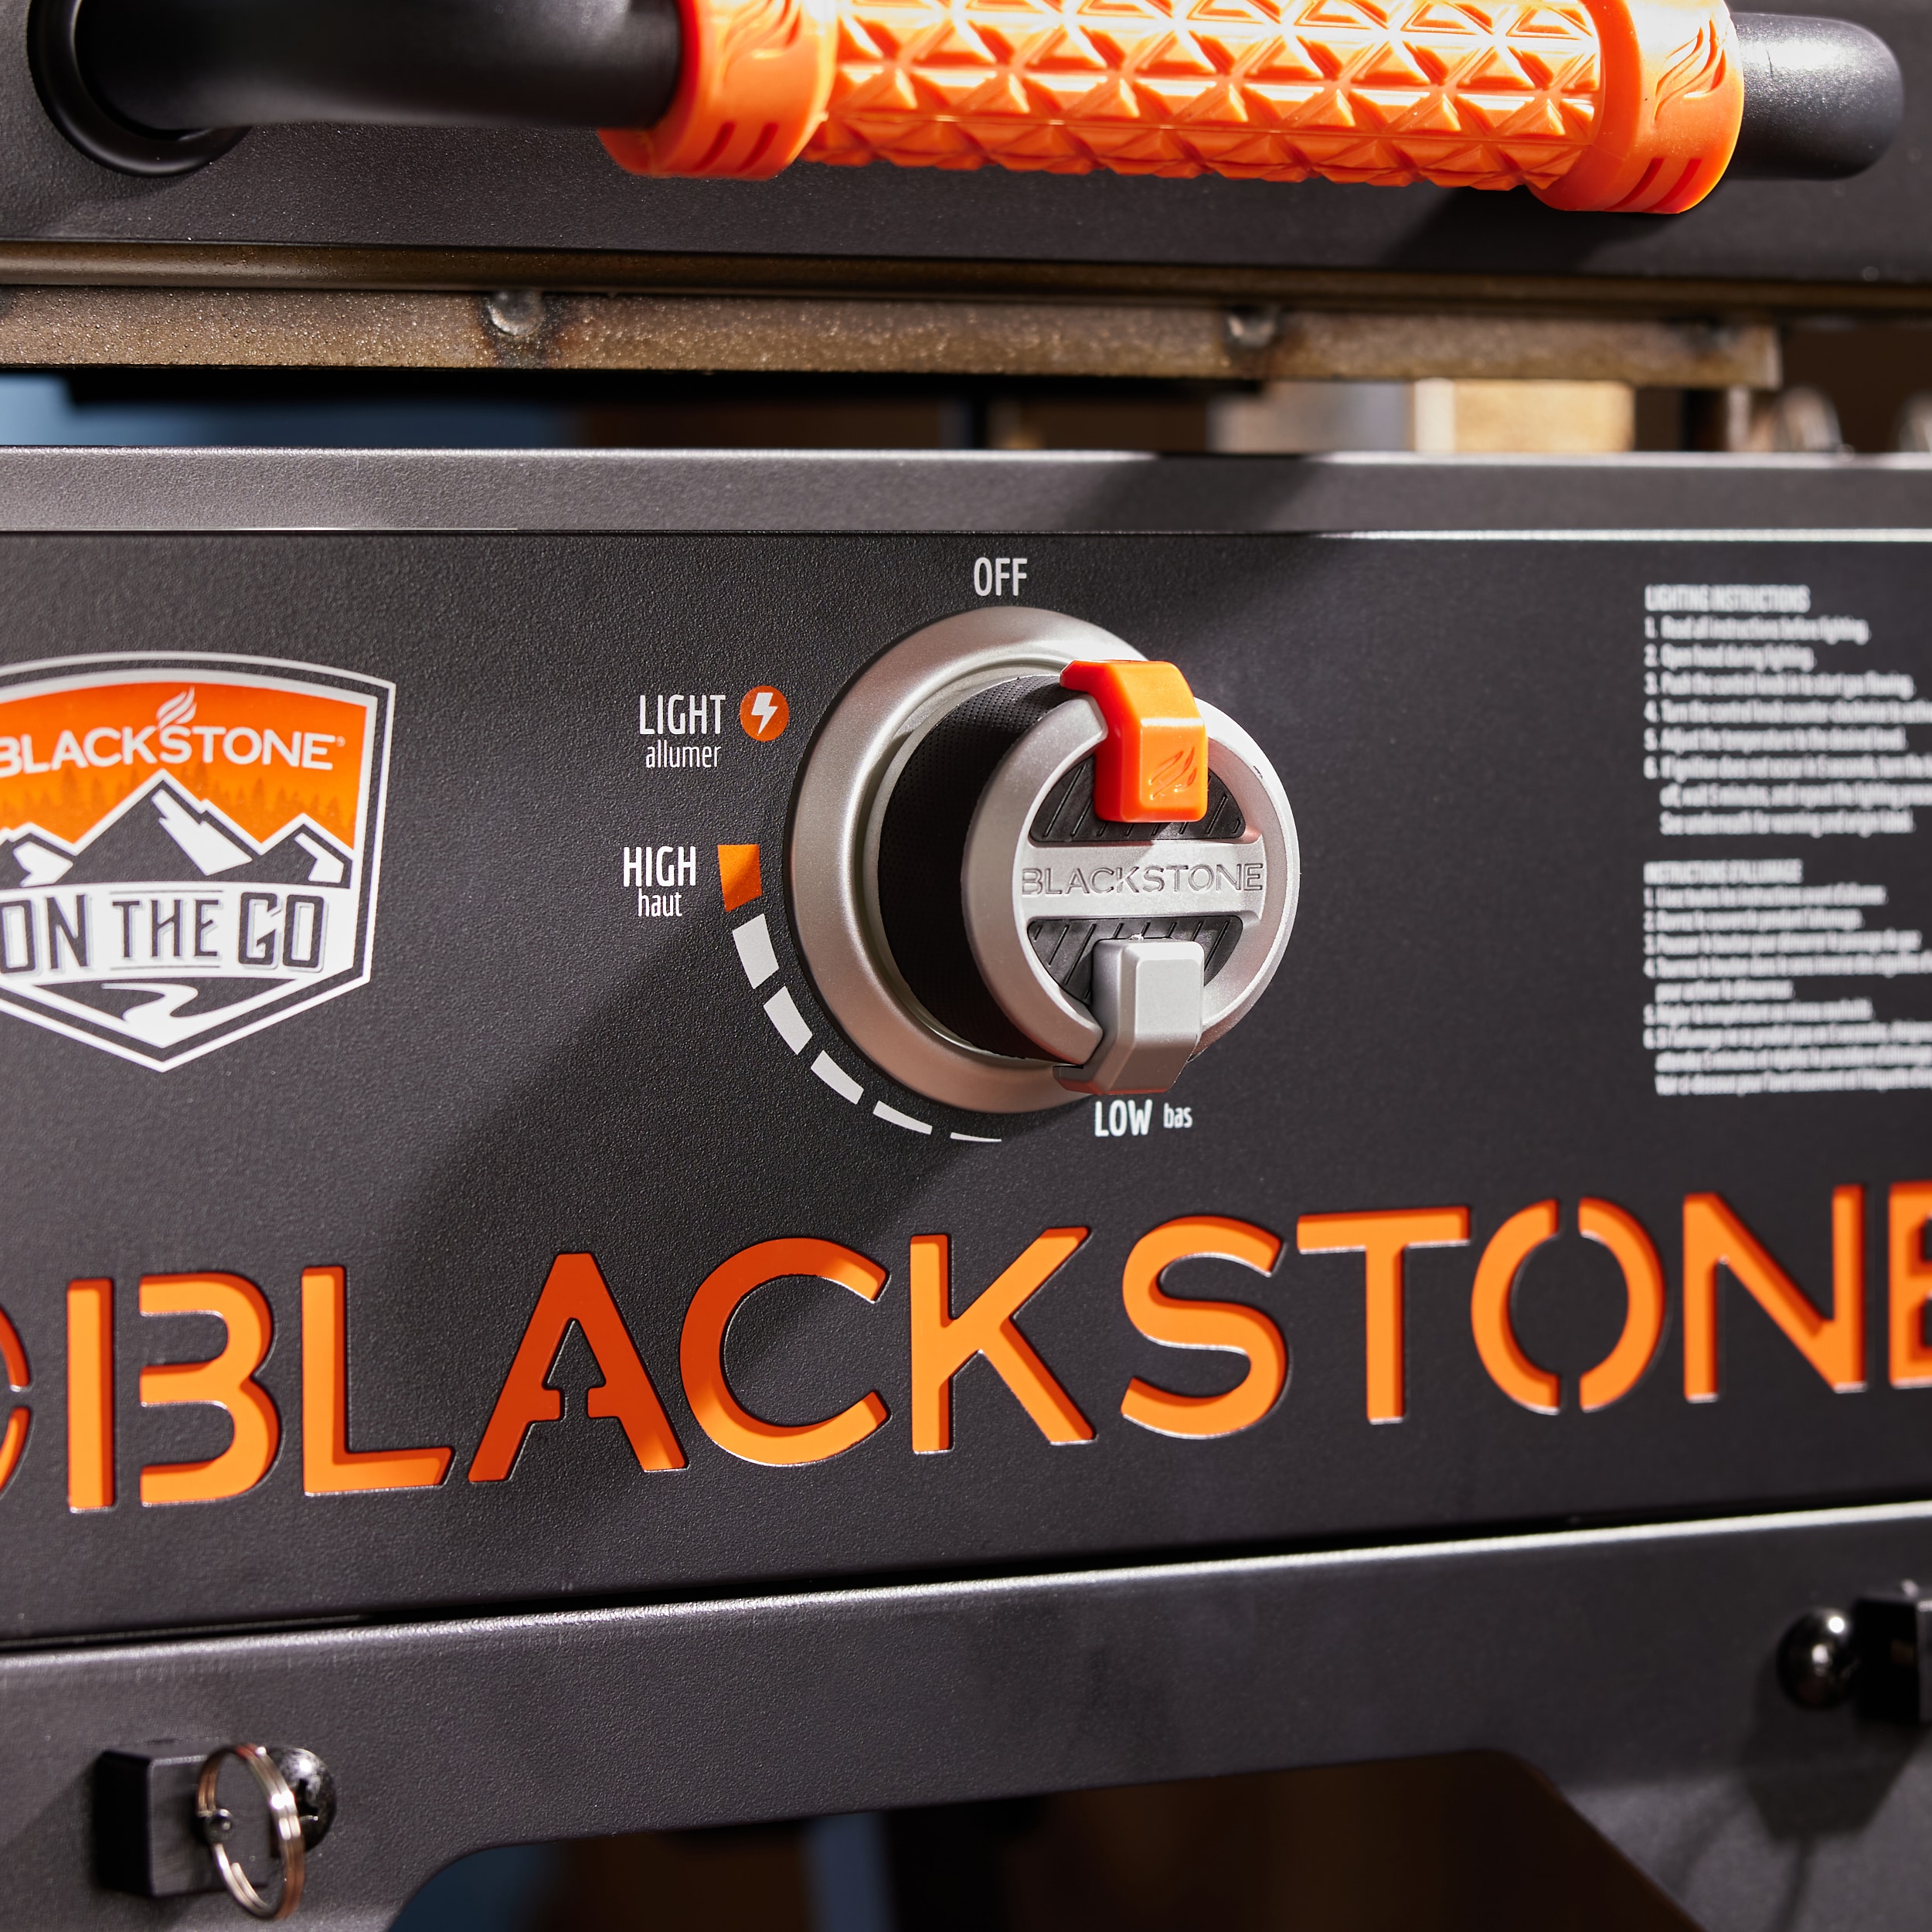 BlackStone 17” Griddle